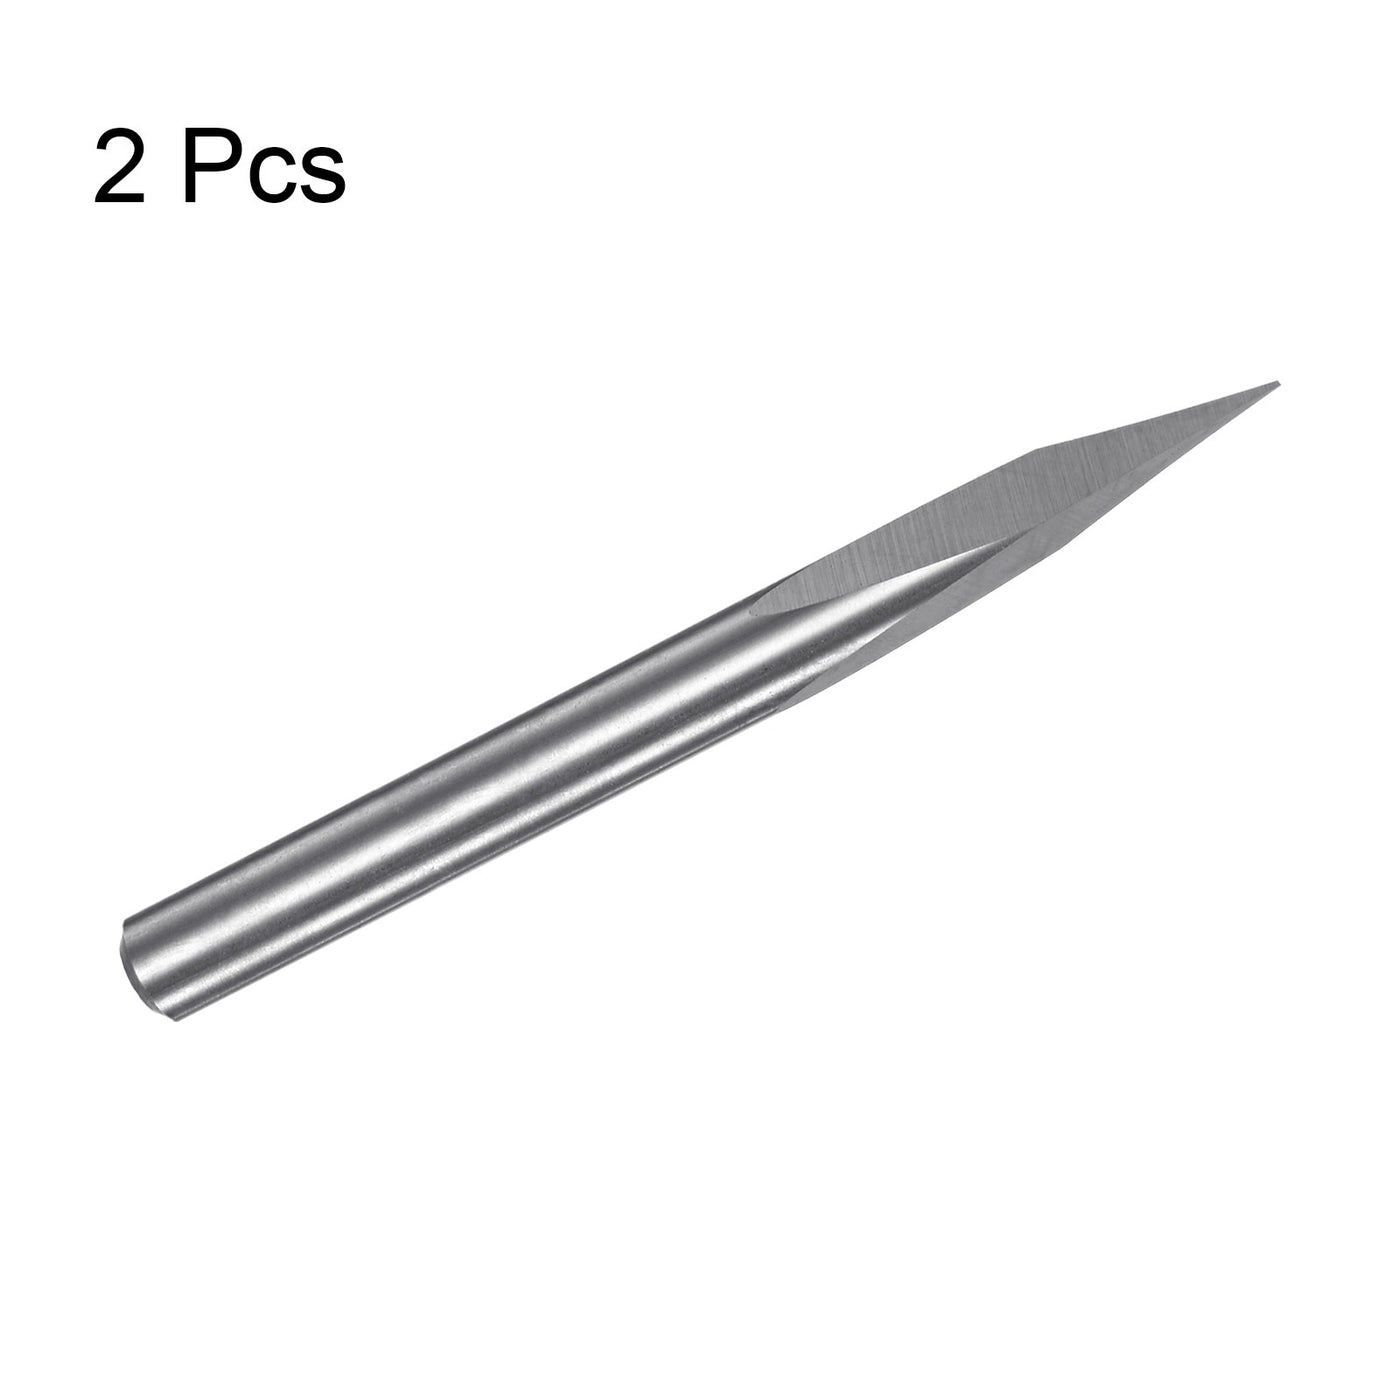 Harfington 4mm Shank 0.2mm Tip 20 Degree Carbide 3 Flutes Wood Engraving CNC Bit 2pcs